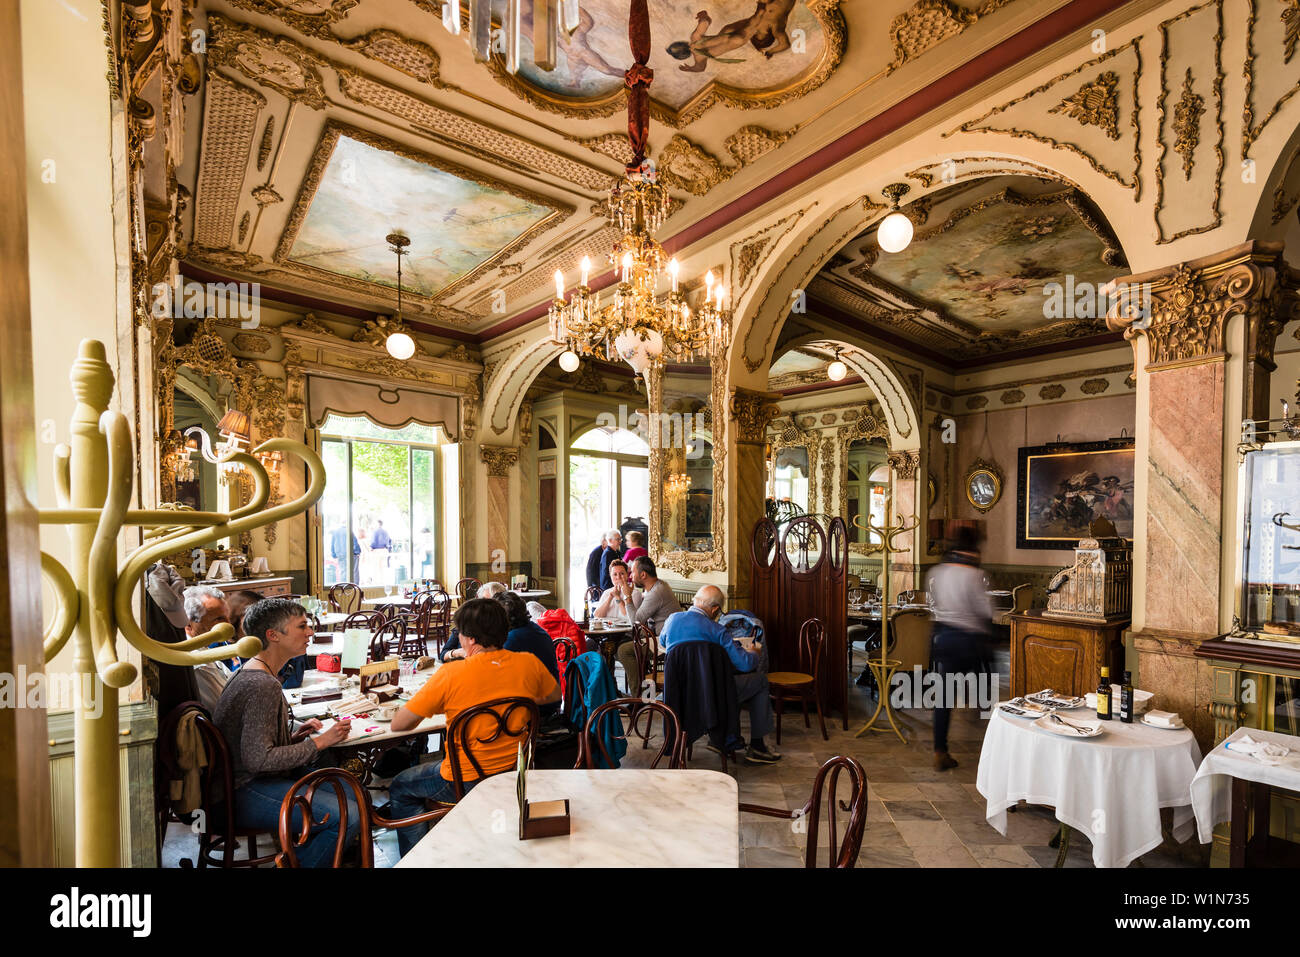 The magnificent interior of Cafe Royalty, Cadiz, Costa de la Luz, Spain Stock Photo